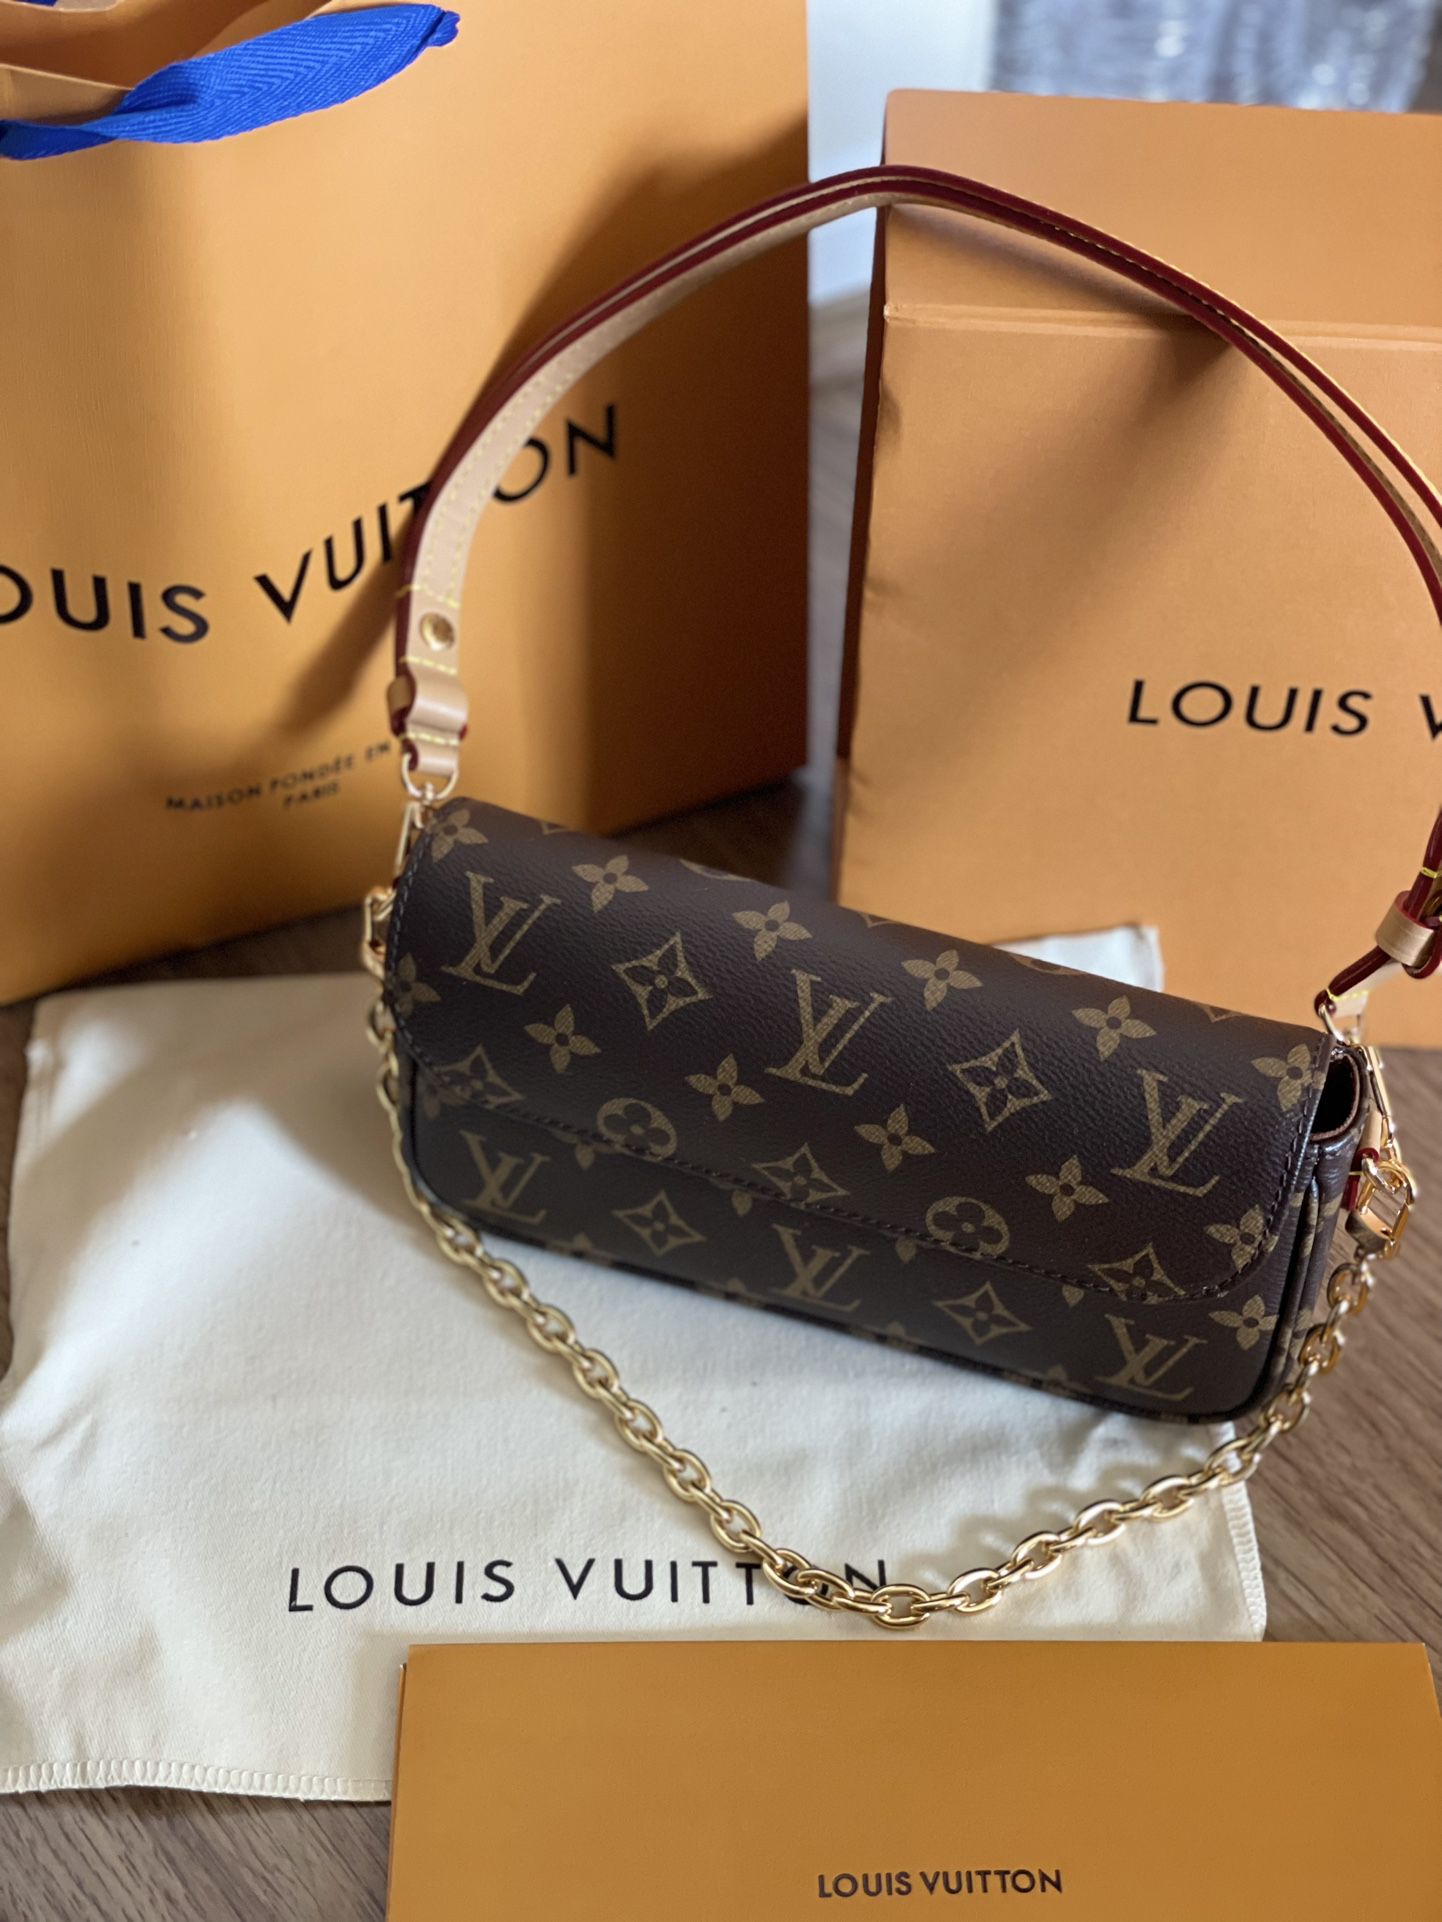 Louis Vuitton Monogram Retiro Handbag Pm for Sale in Los Angeles, CA -  OfferUp